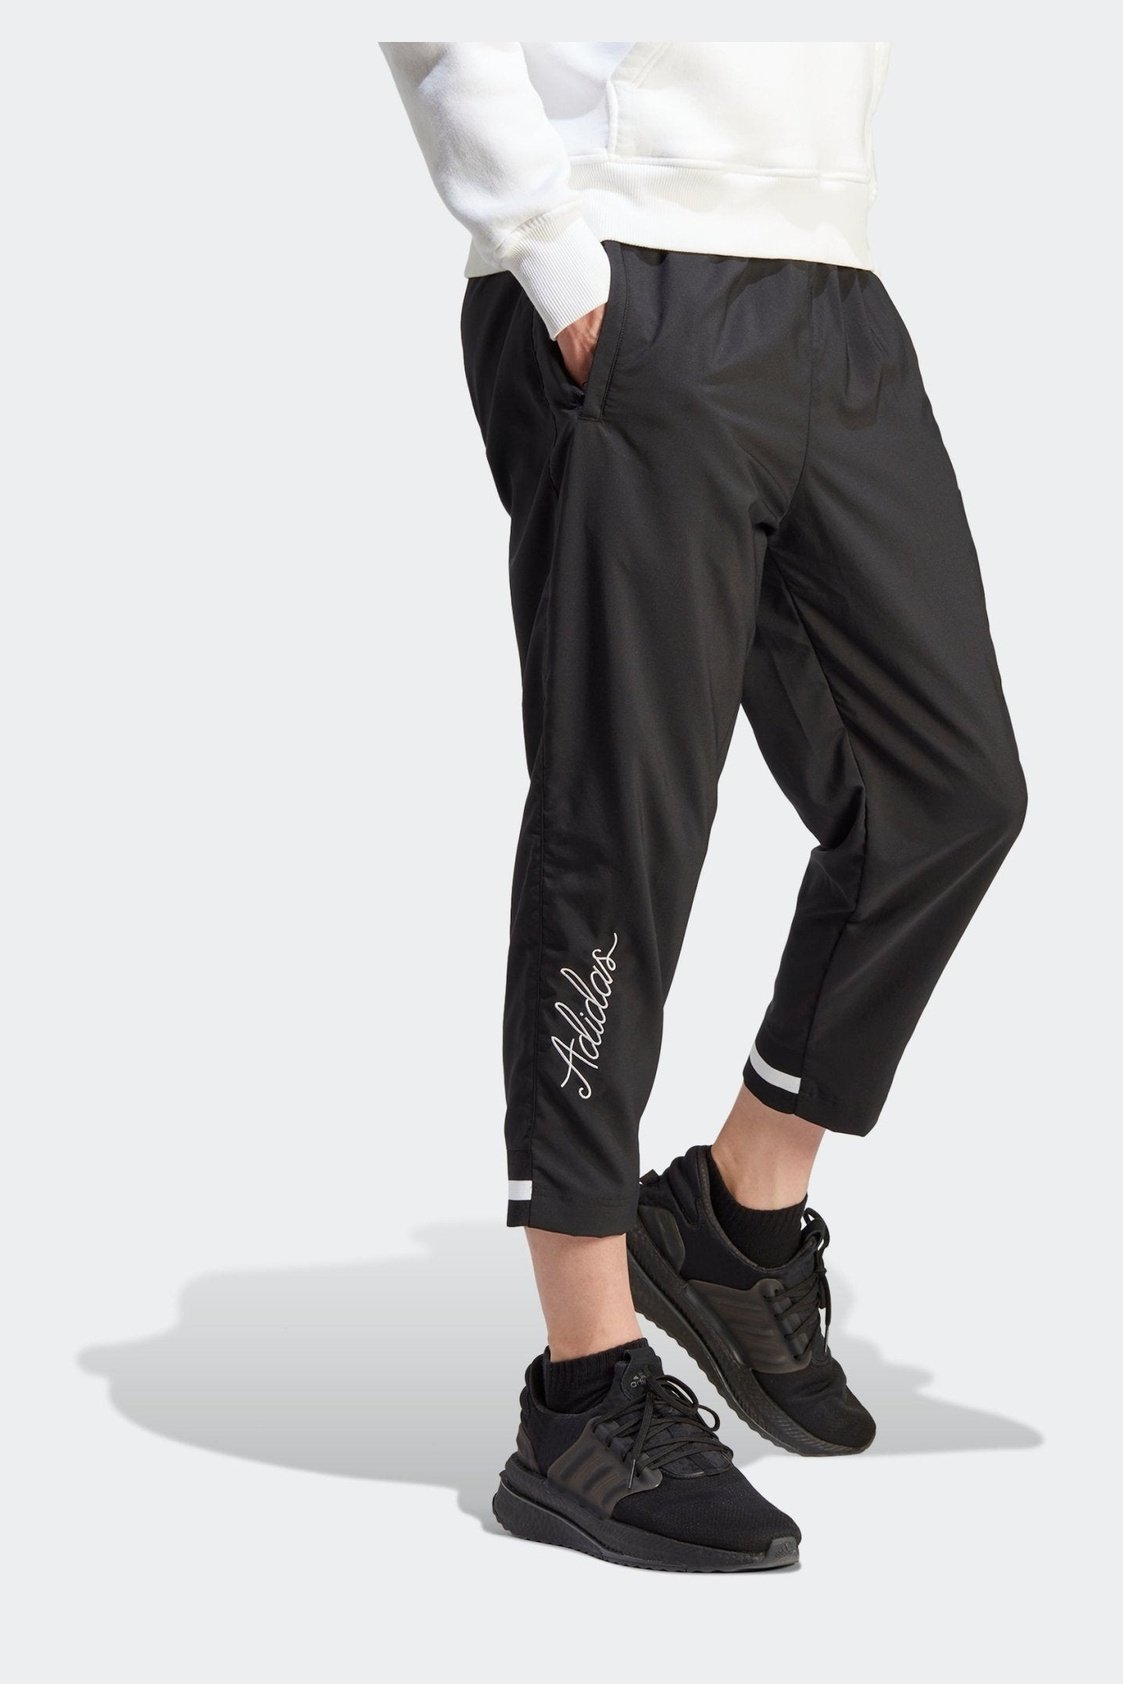 ADIDAS - מכנסיים ארוכים לגברים SCRIBBLE בצבע שחור - MASHBIR//365